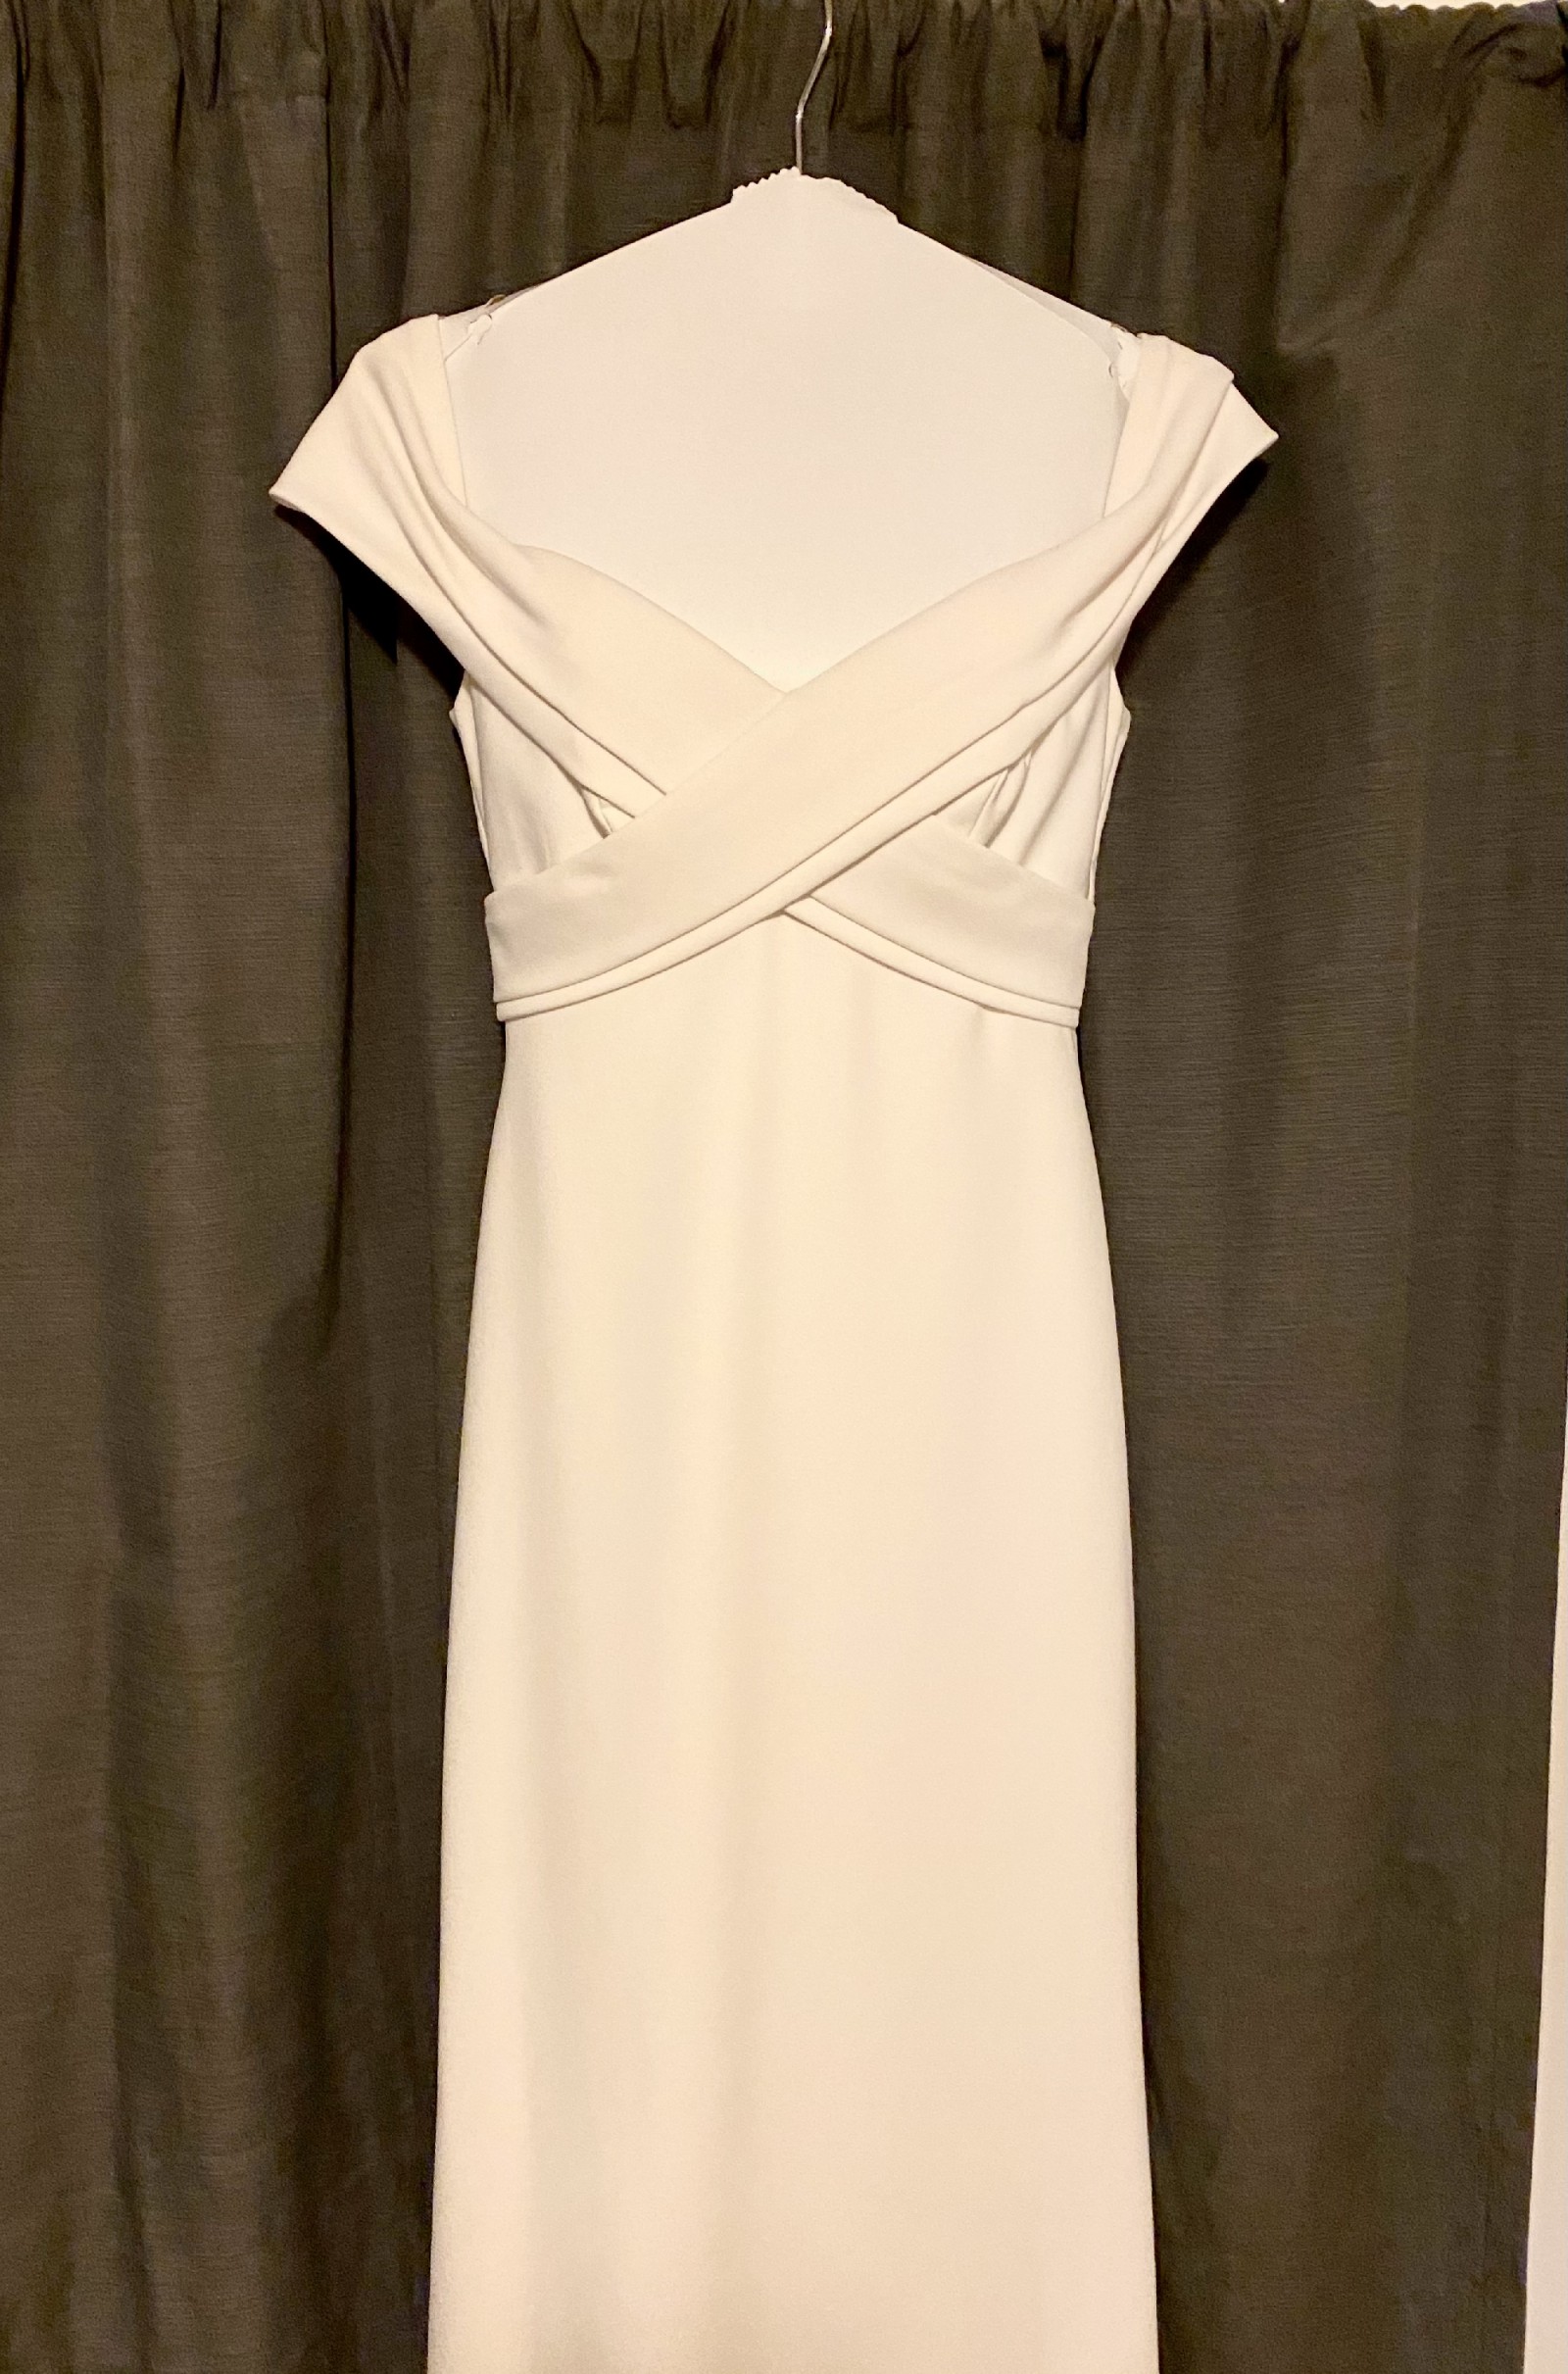 BHLDN Theia Blake Gown Sample Wedding Dress Save 40% - Stillwhite